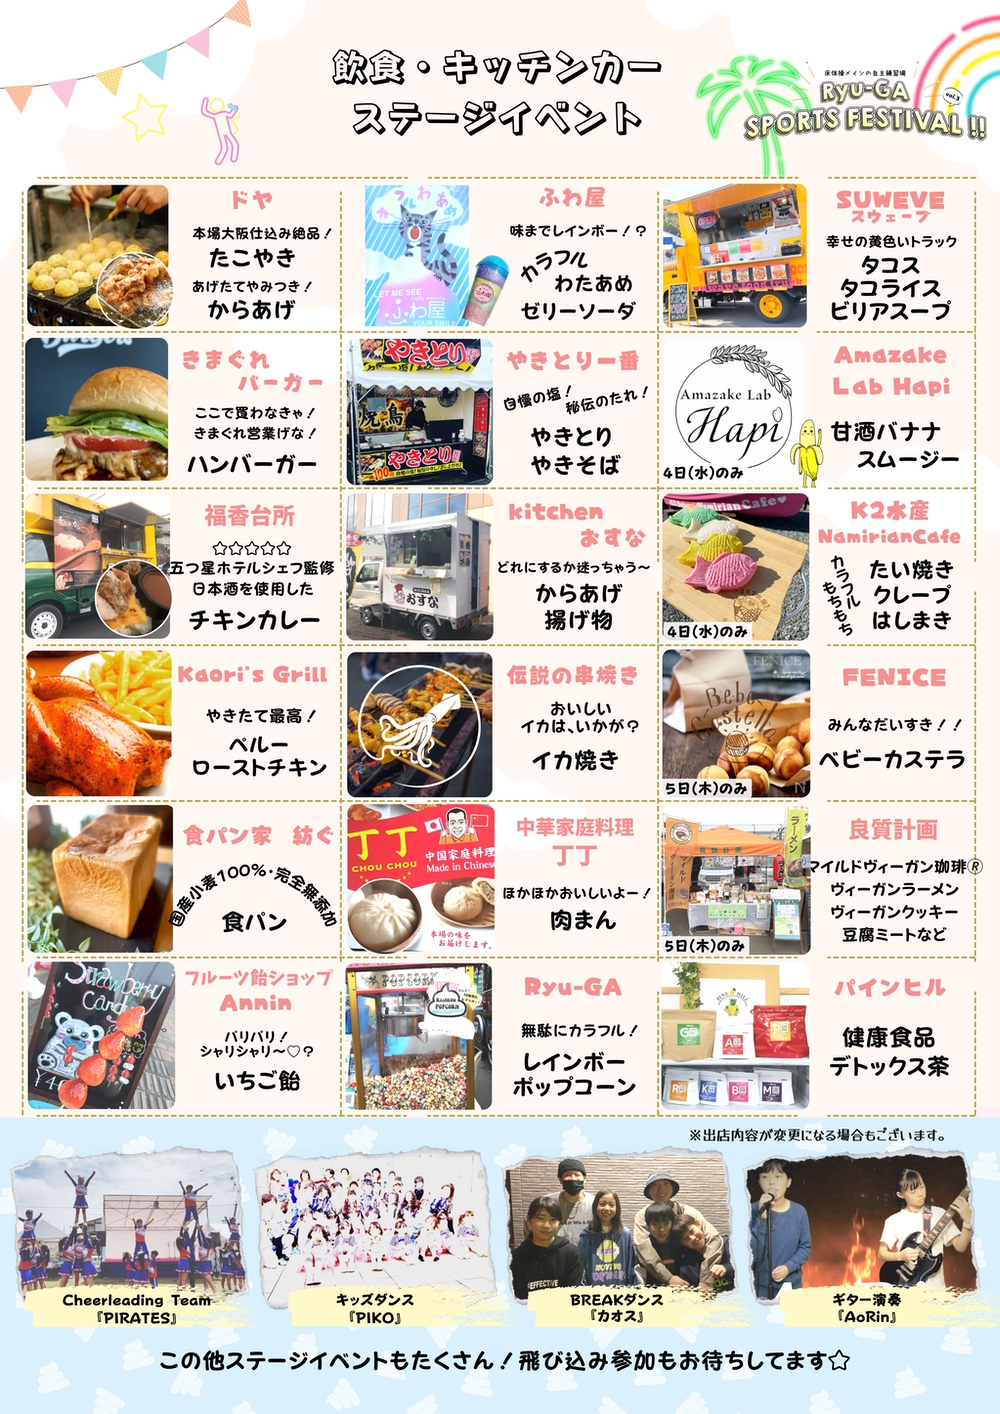 Ryu-GA SPORTS FESTIVAL 飲食・キッチンカー